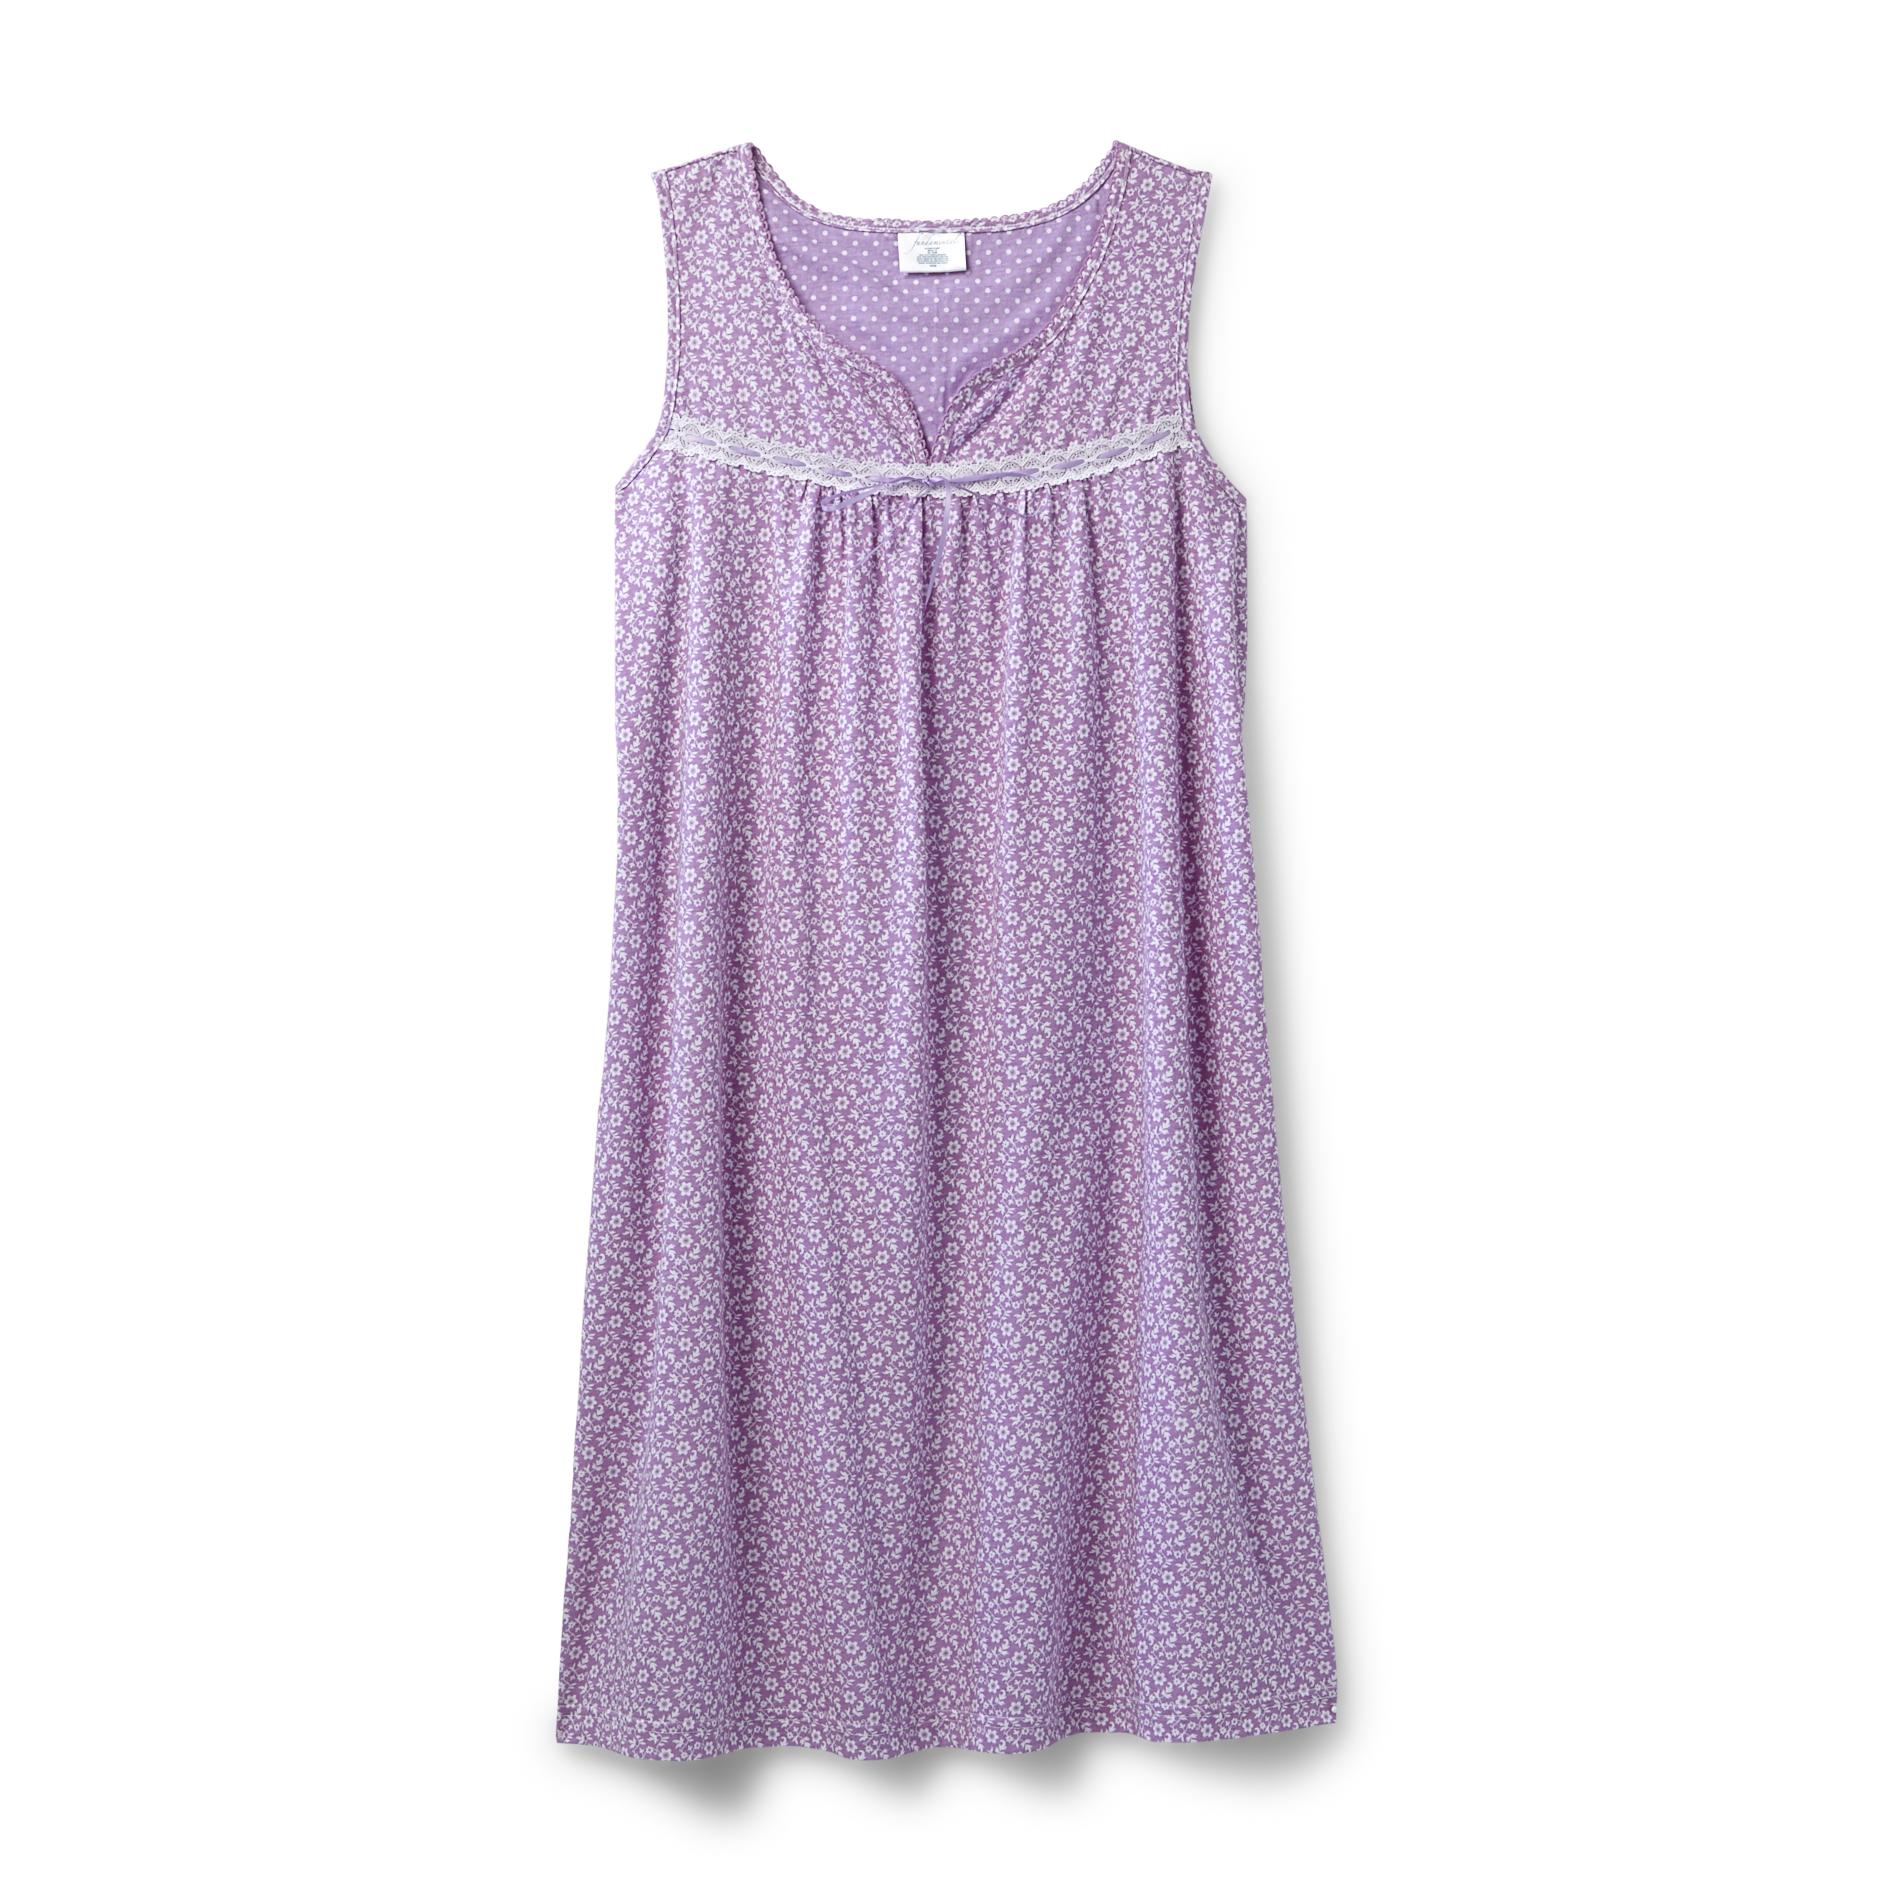 Fundamentals Women's Sleeveless Nightgown - Floral